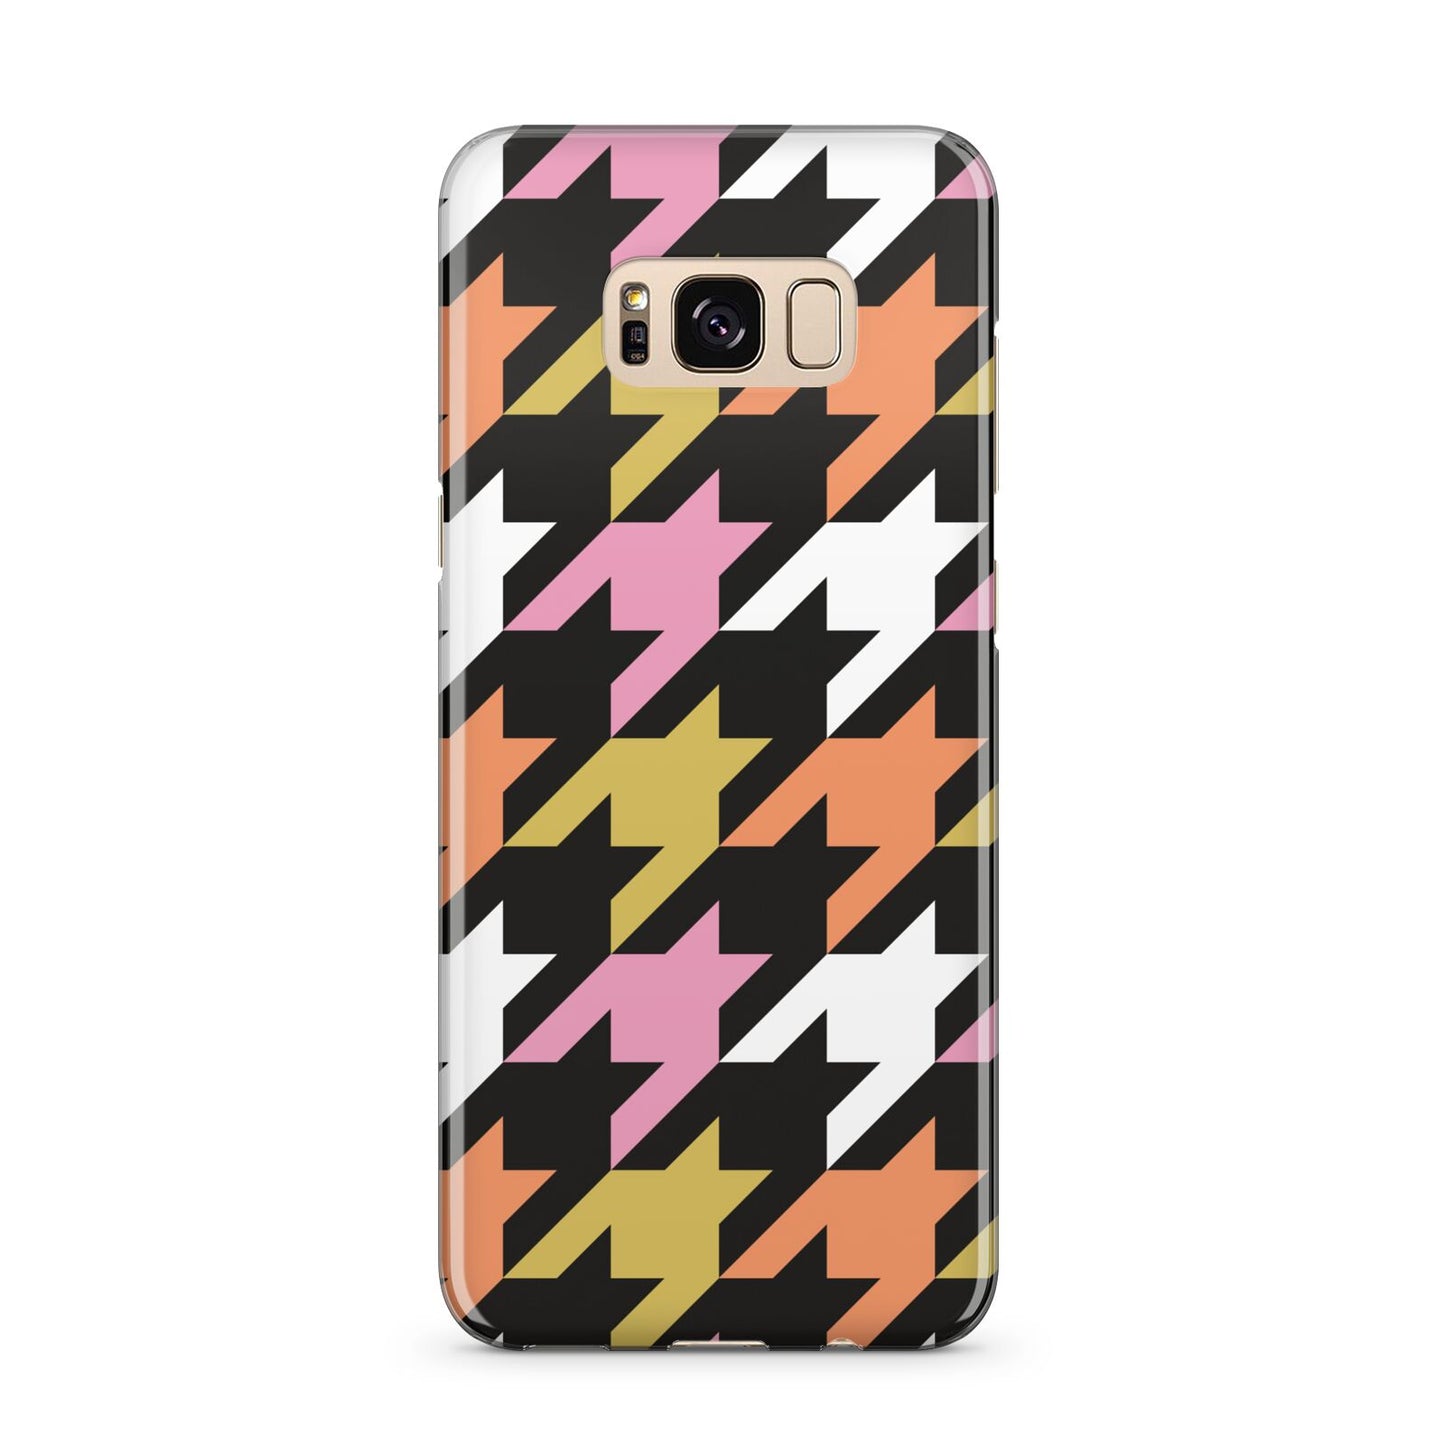 Retro Houndstooth Samsung Galaxy S8 Plus Case